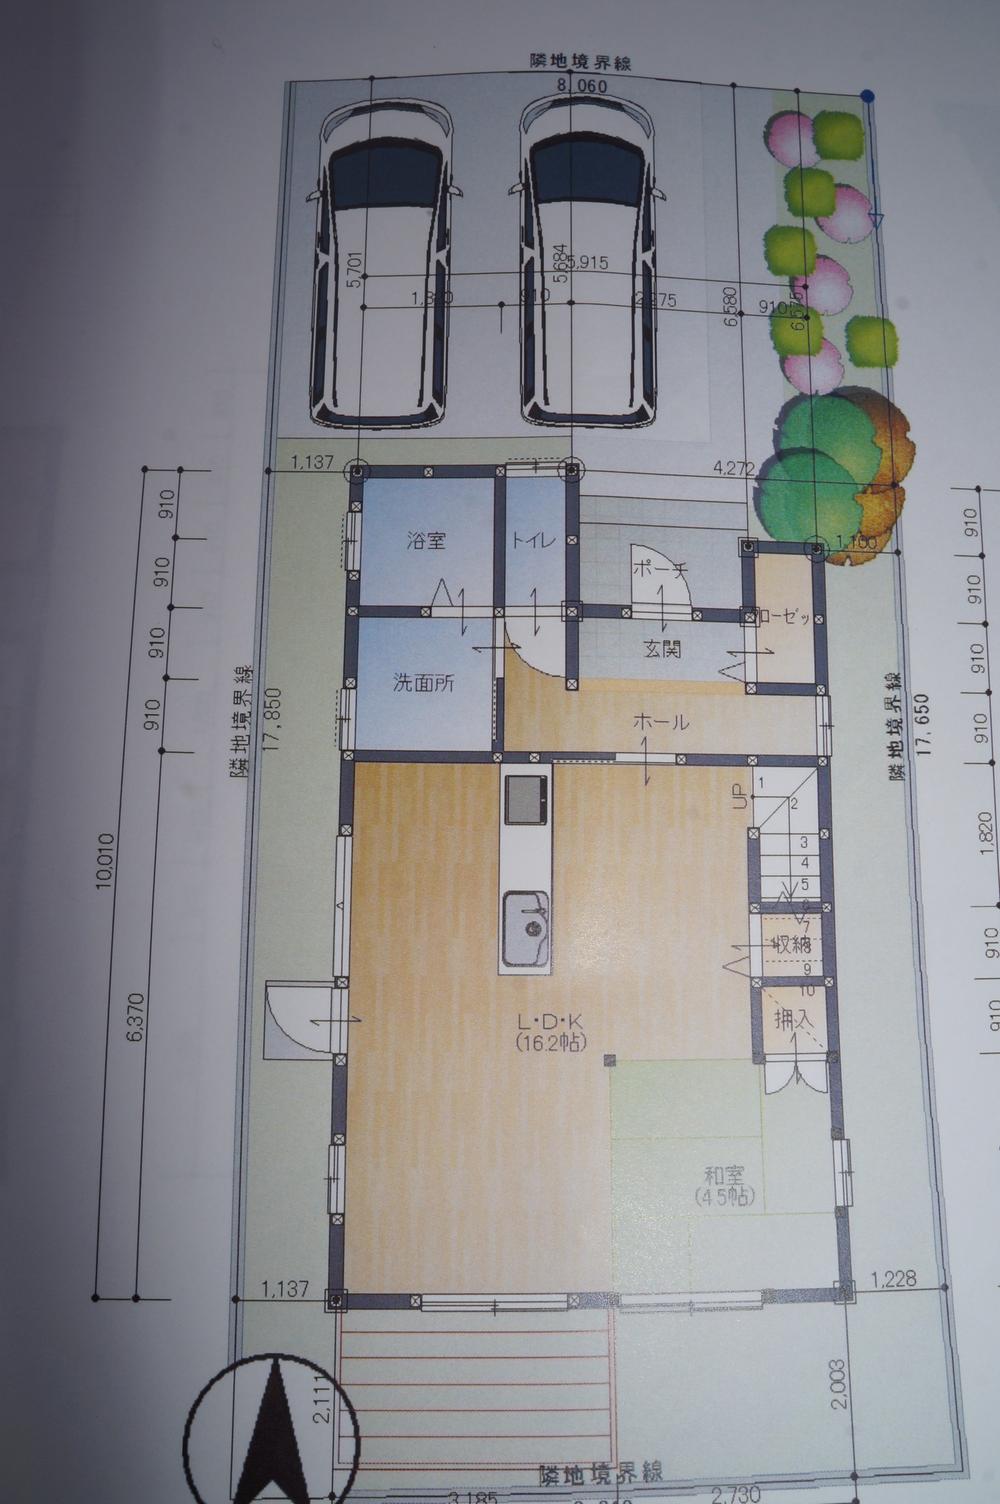 Building plan example (floor plan). Building plan example   Building price 10.8 million yen, Building area 85.95  sq m